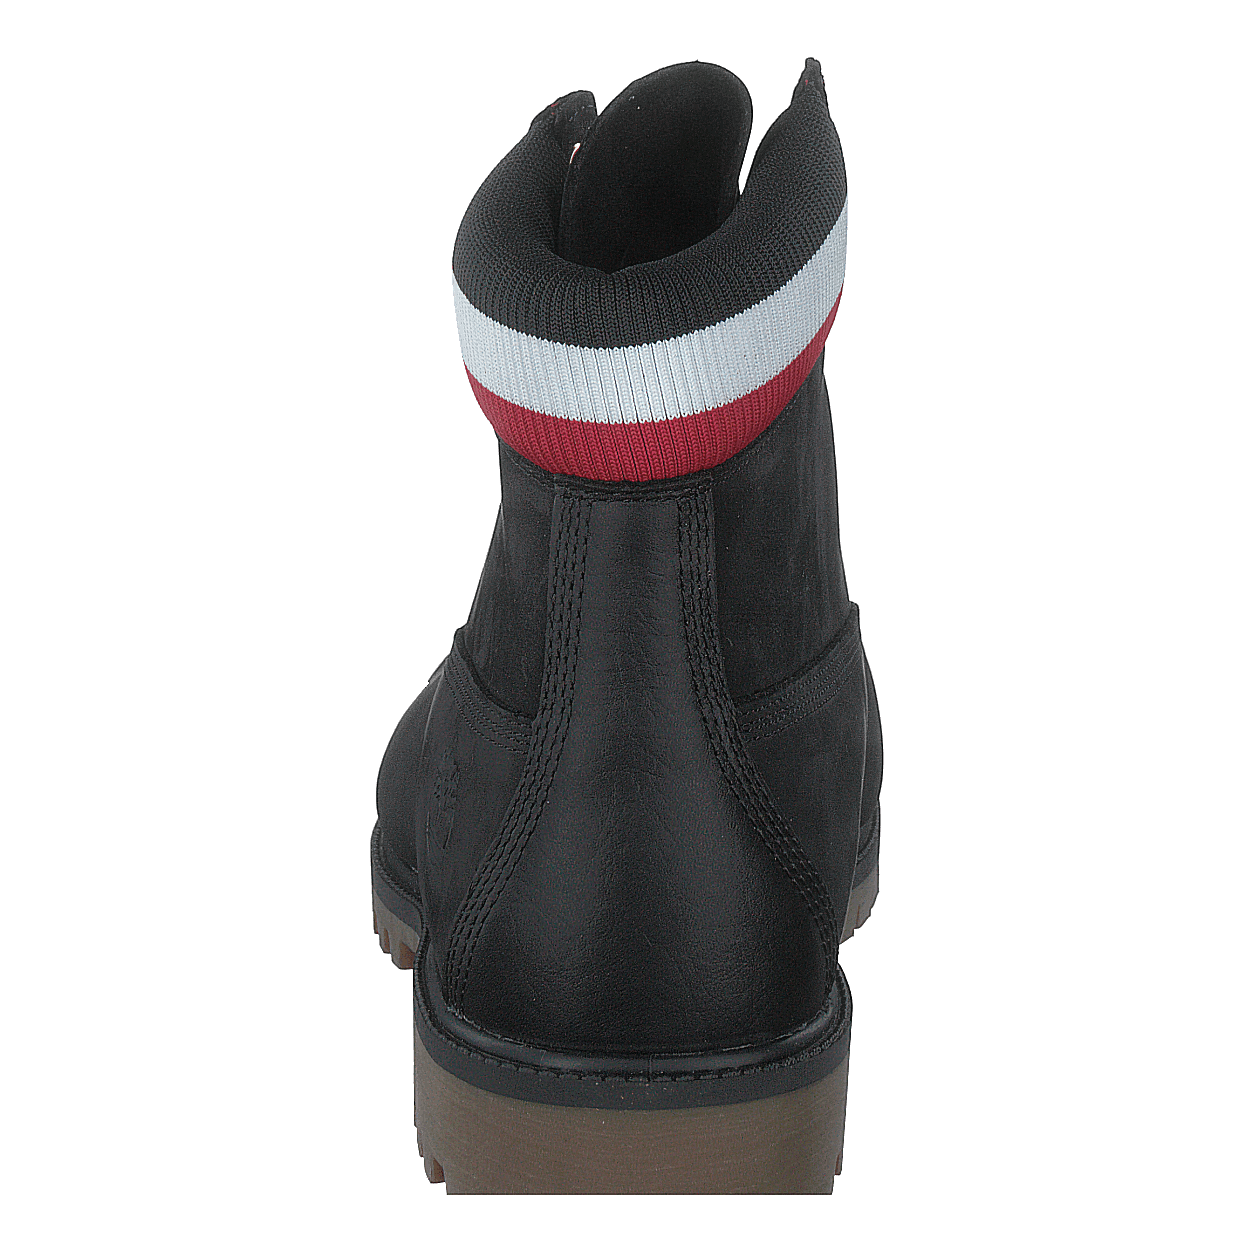 6" Prem Rubber Cup Boot Black